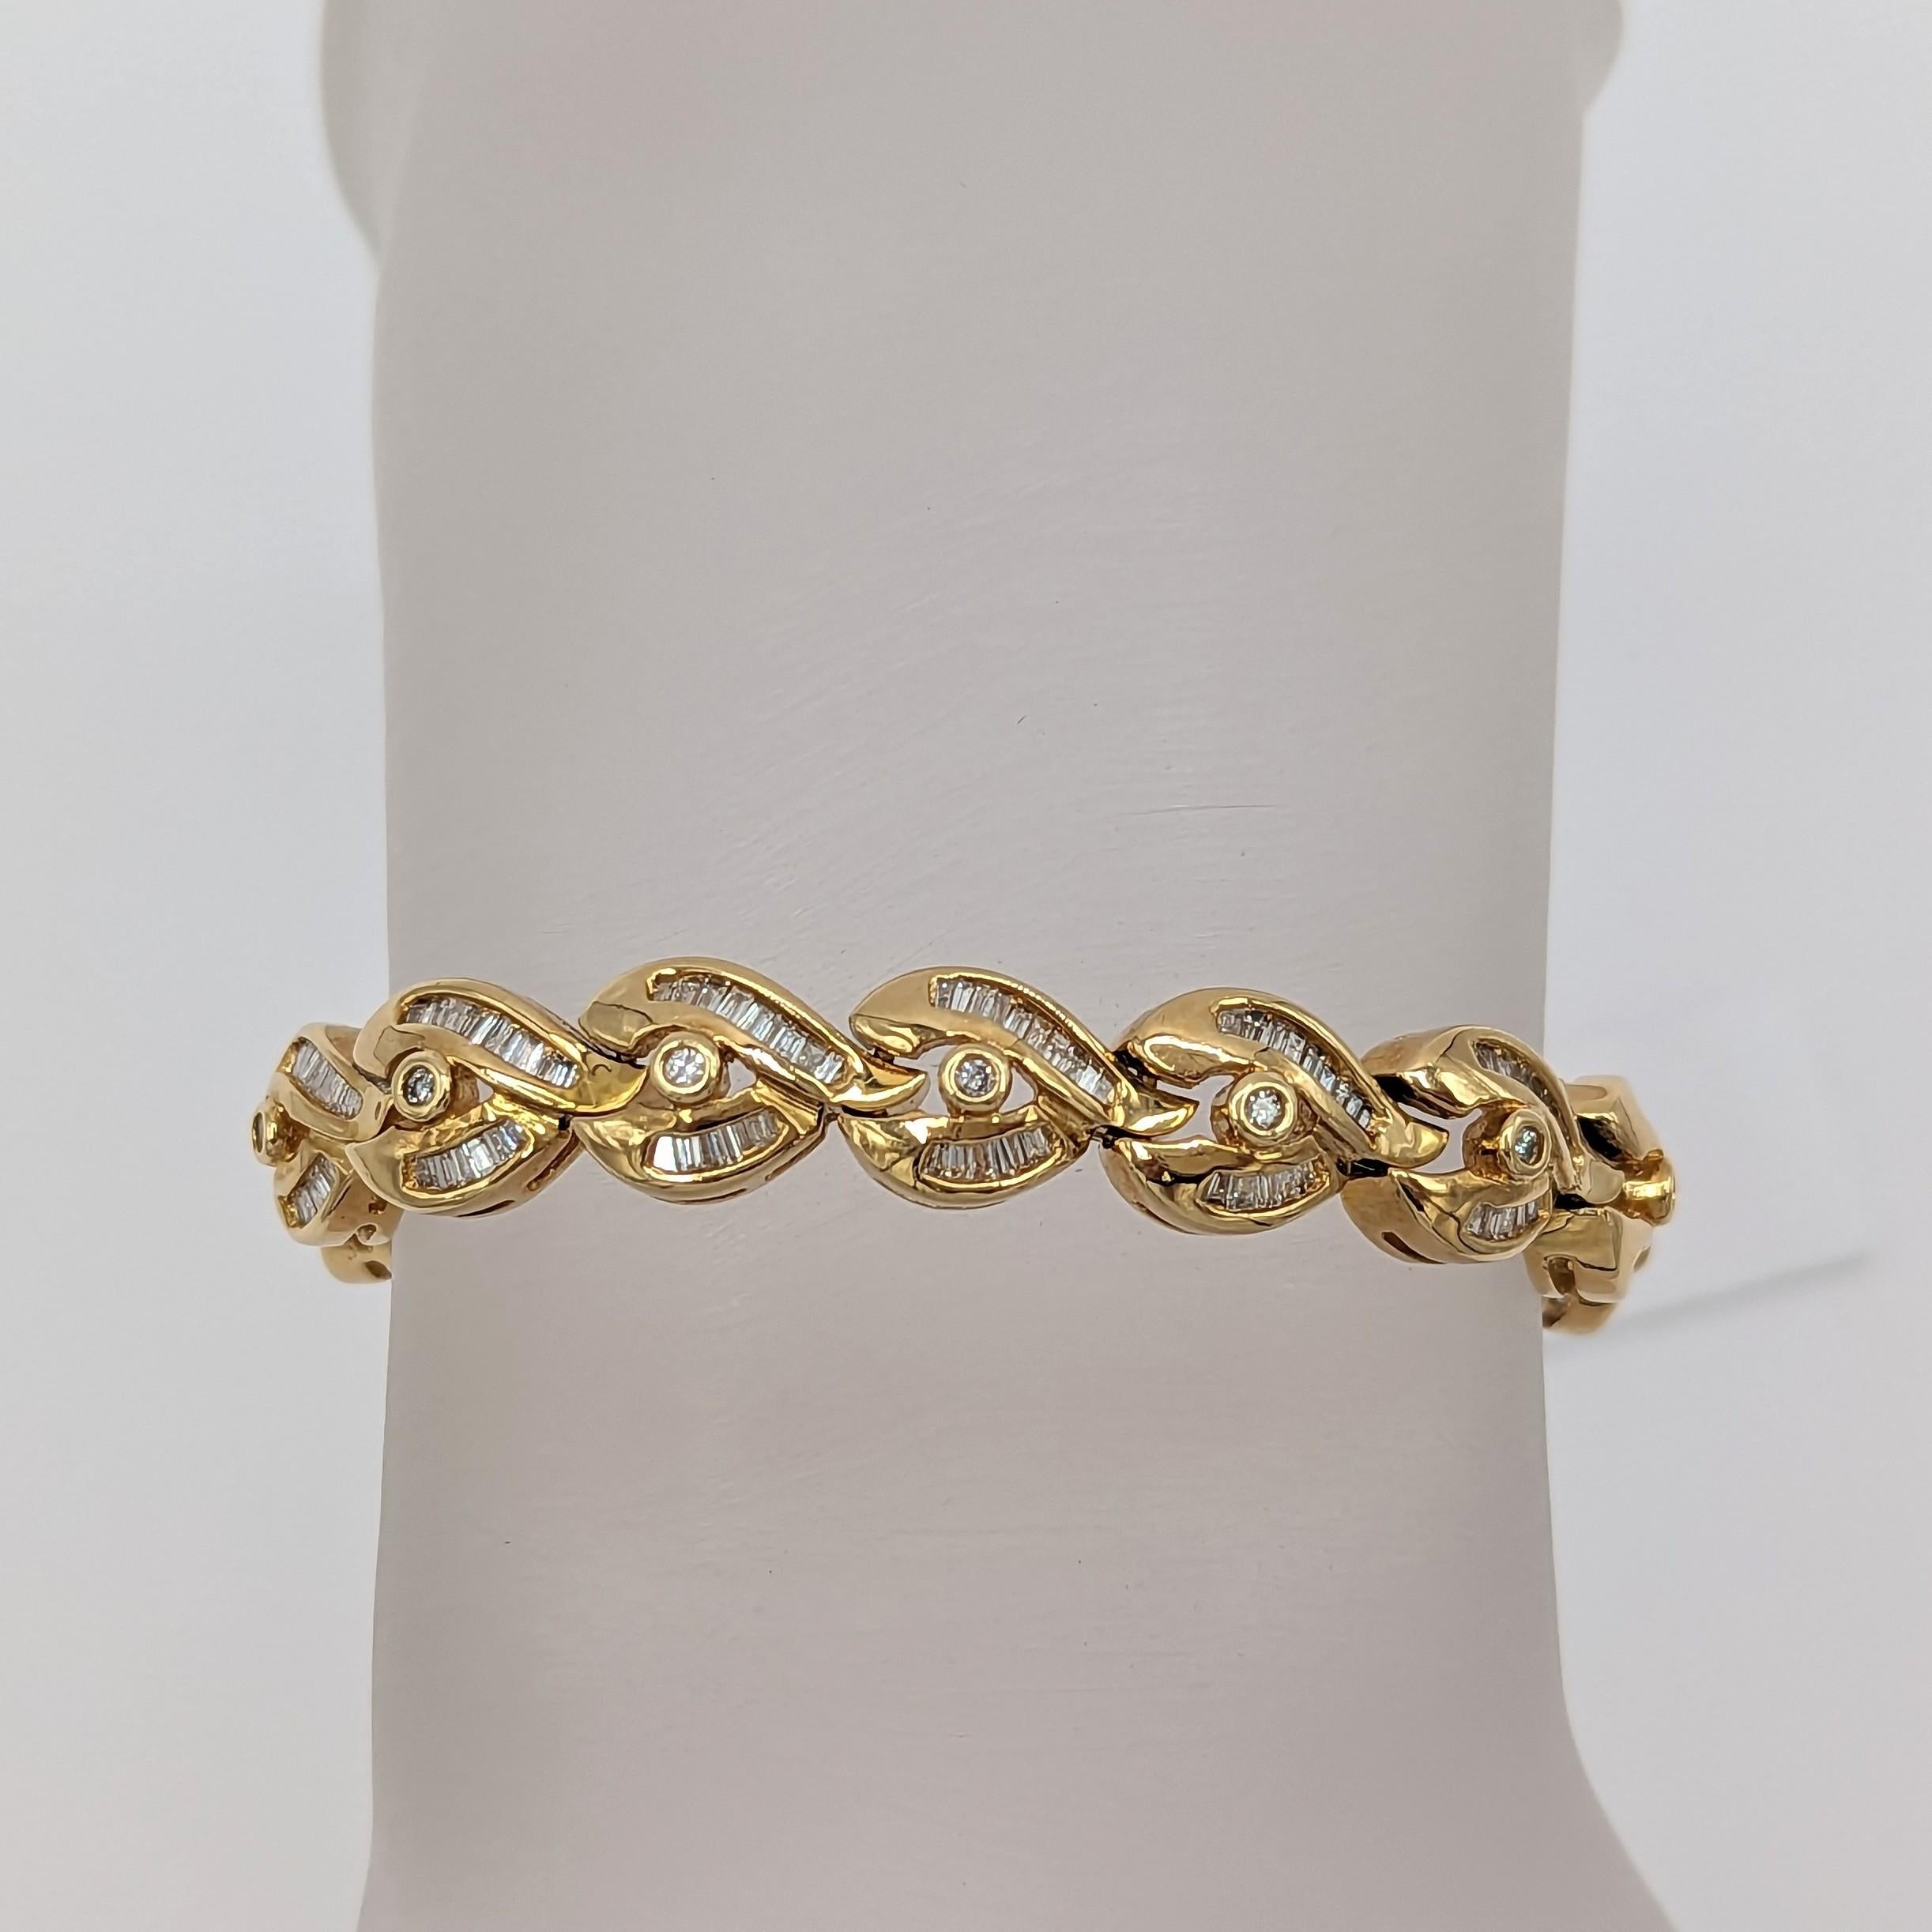 Baguette Cut White Diamond Design Bracelet in 18 Karat Yellow Gold